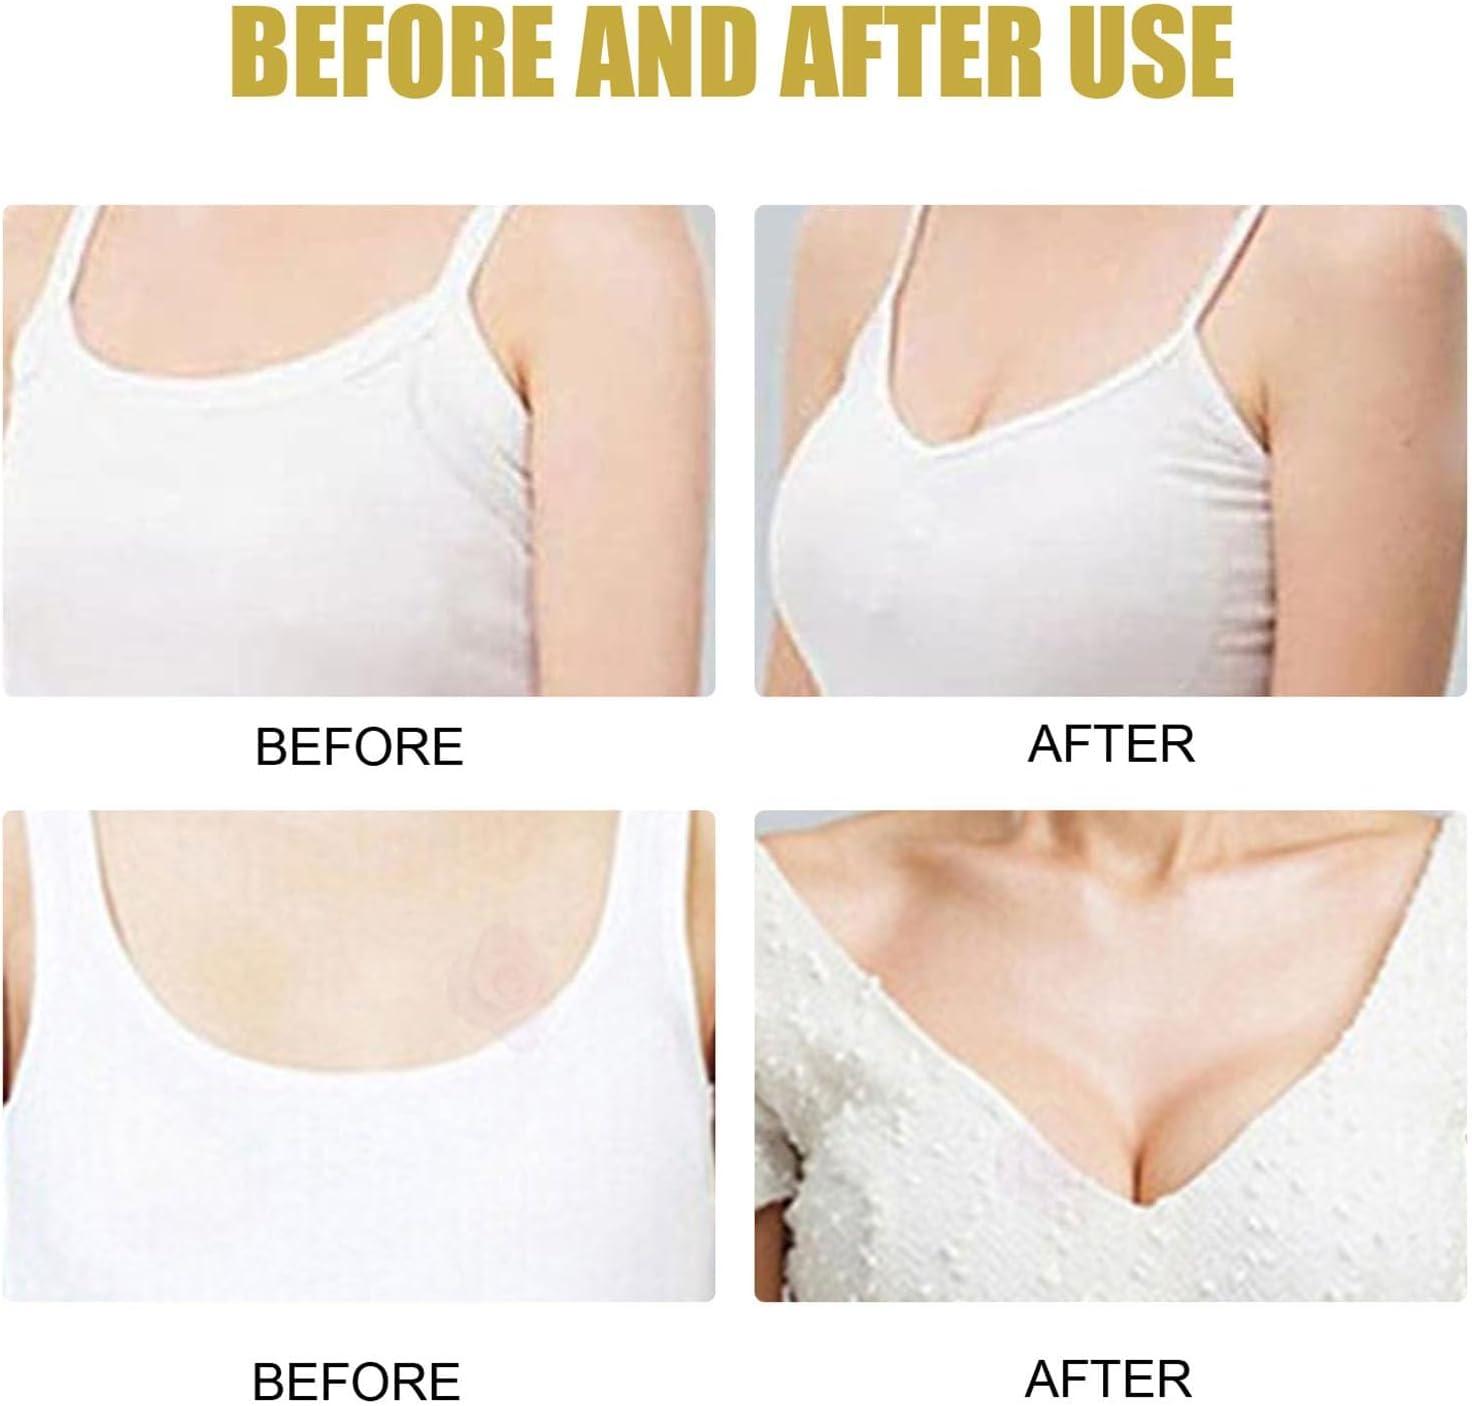 New Fiitobeauty Breast Enhancement Patch, Breast Enhancement Patch For Women